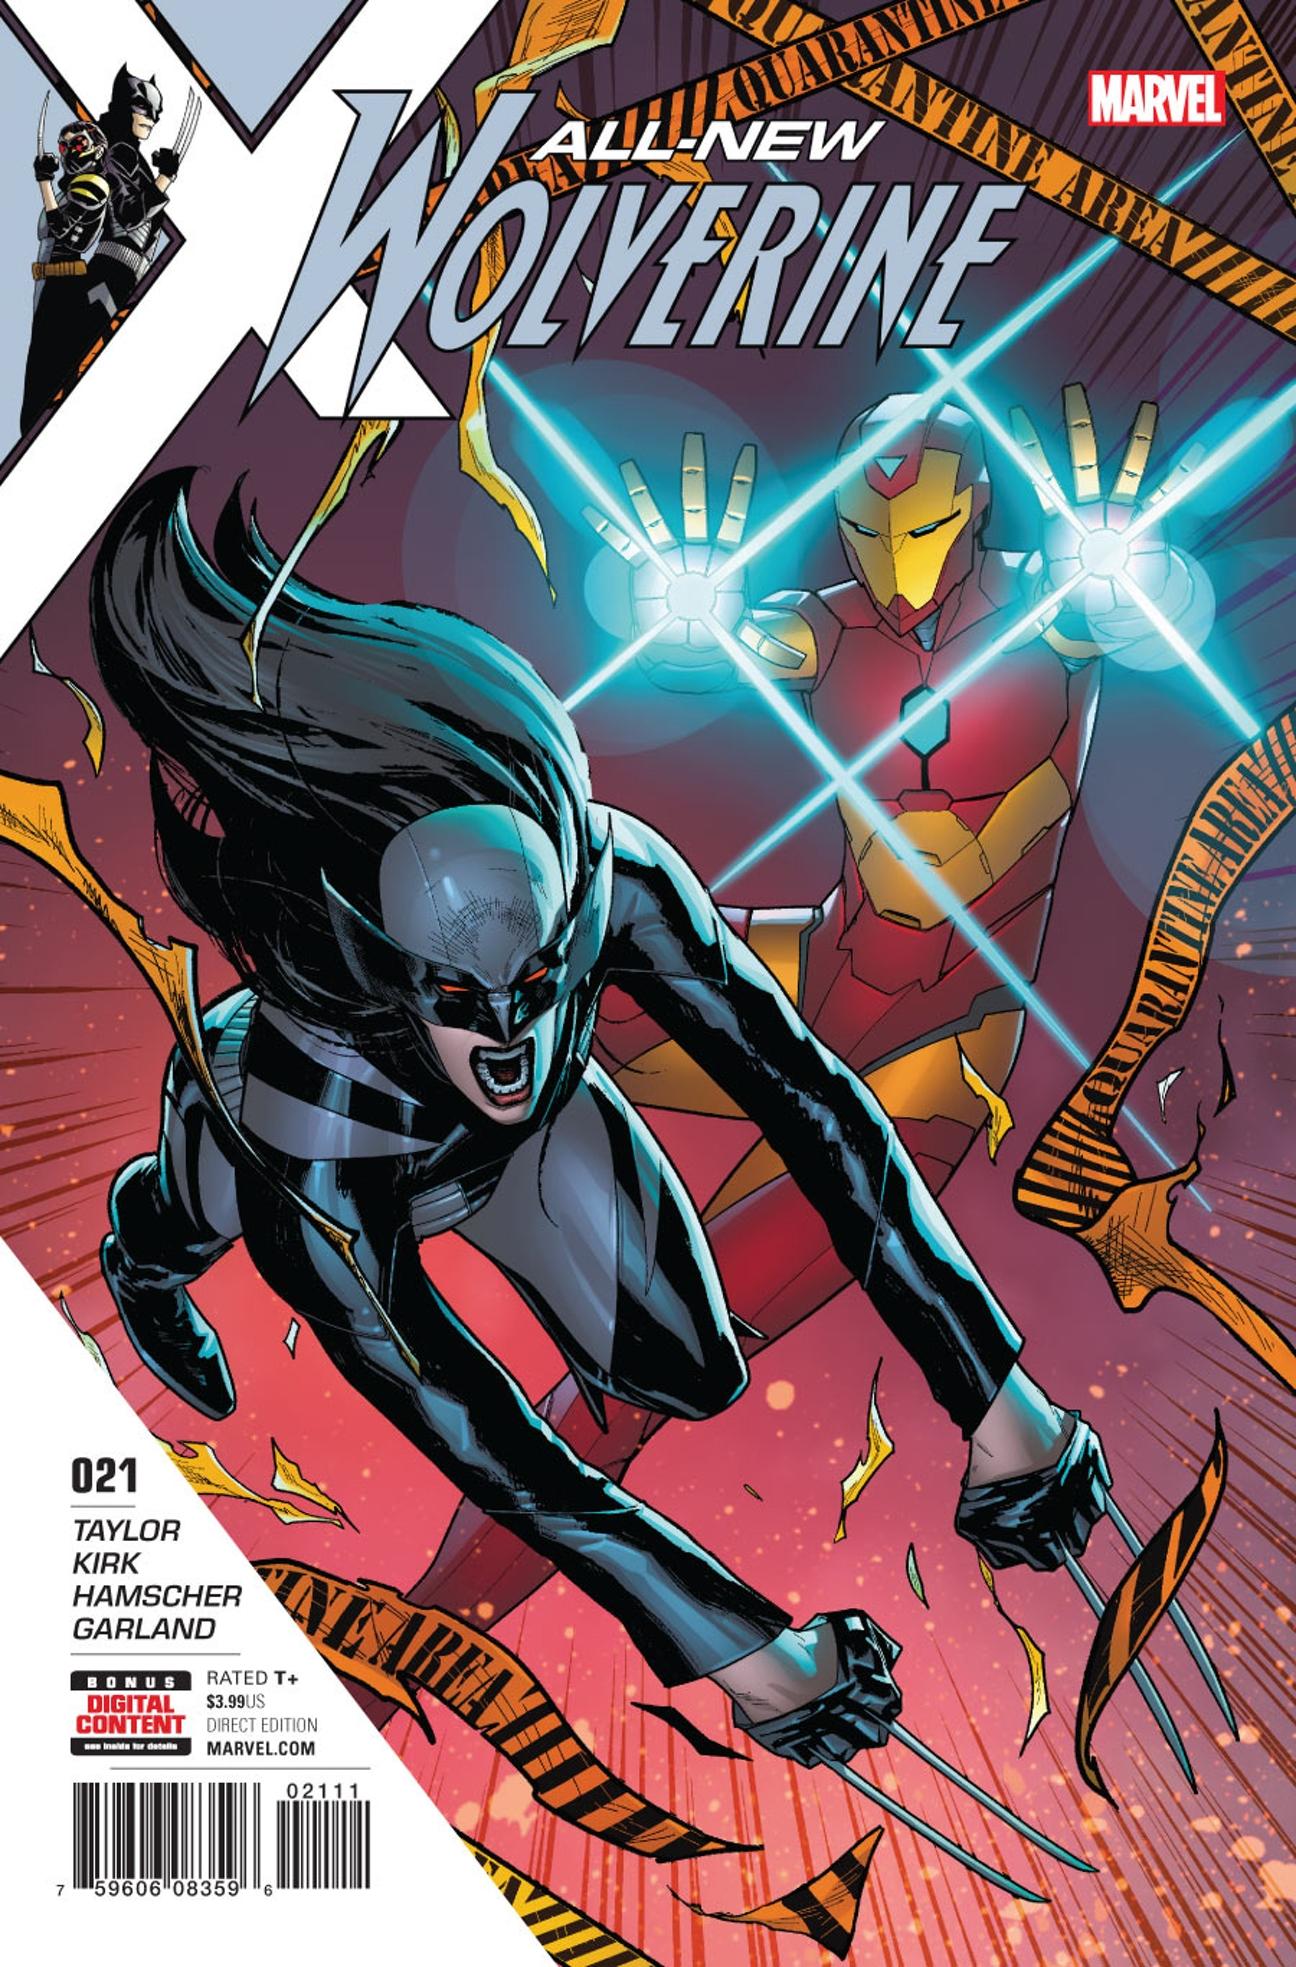 All-New Wolverine Vol. 1 #21